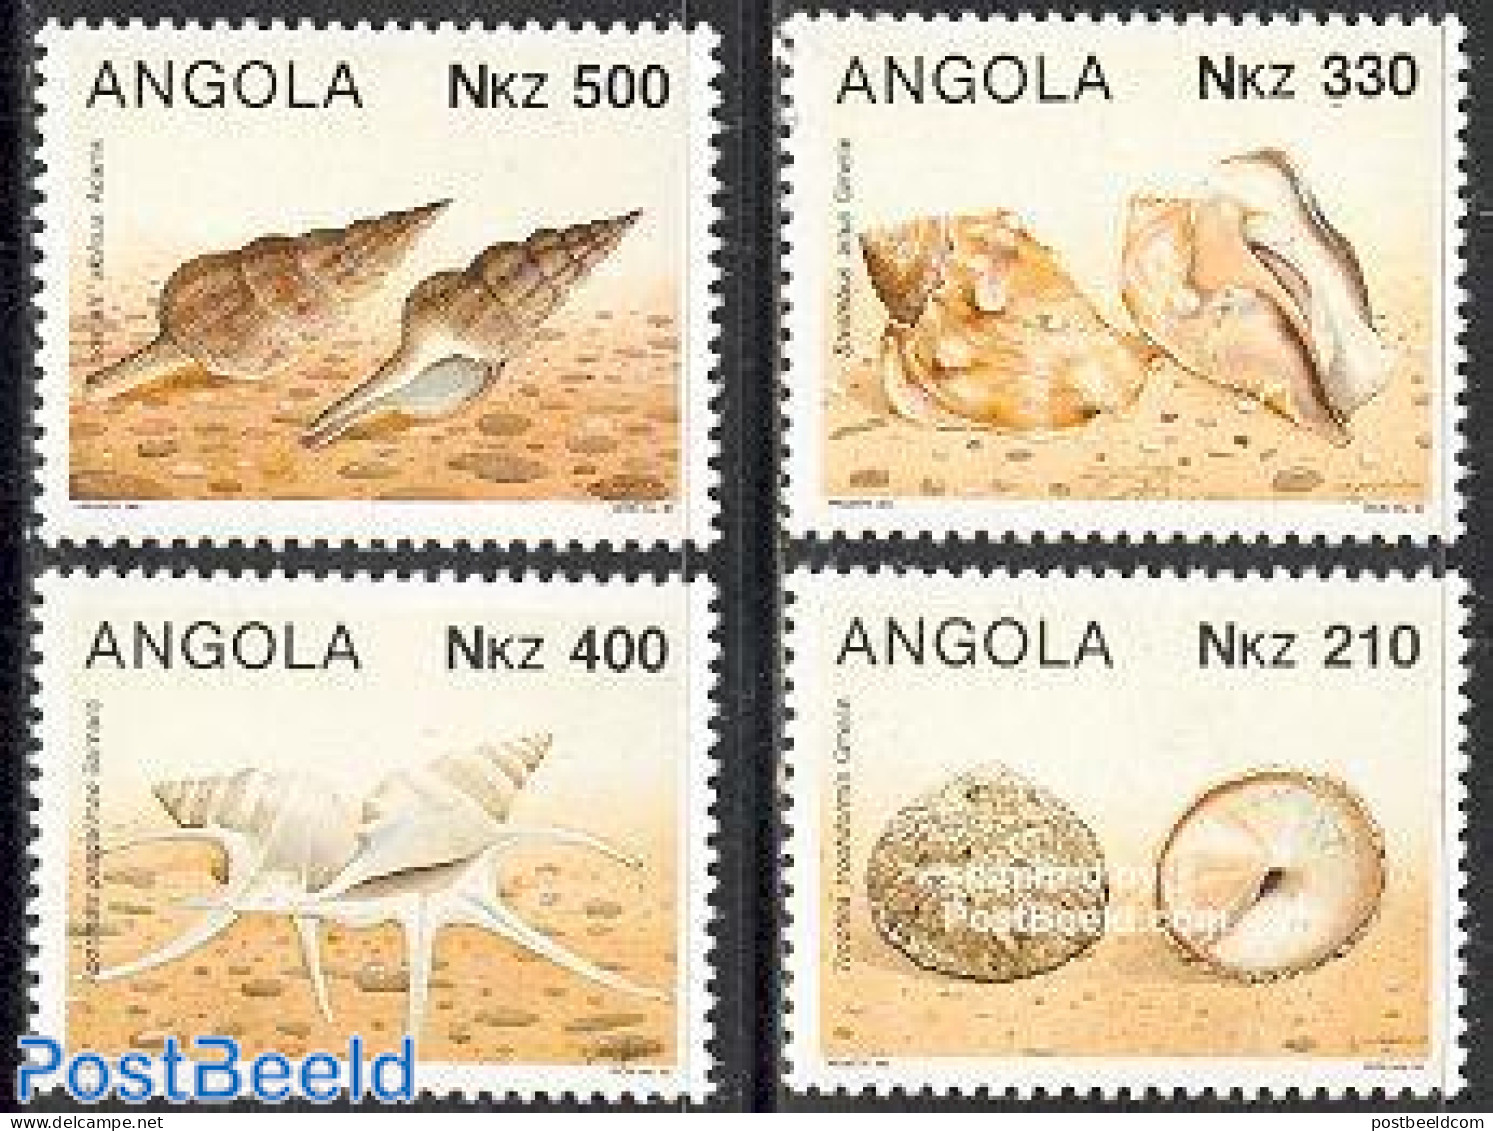 Angola 1993 Shells 4v, Mint NH, Nature - Shells & Crustaceans - Marine Life